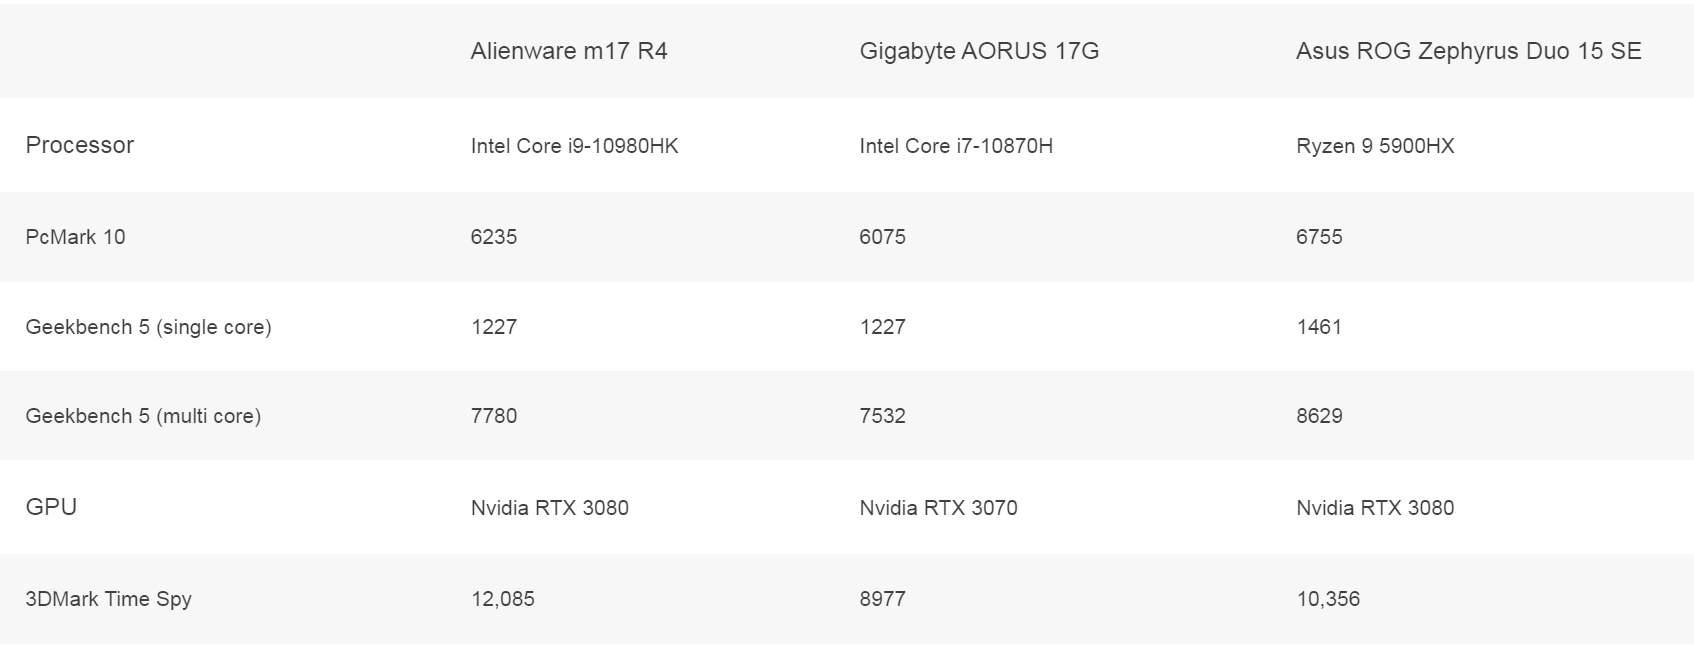 Đánh giá laptop Alienware m17 R4